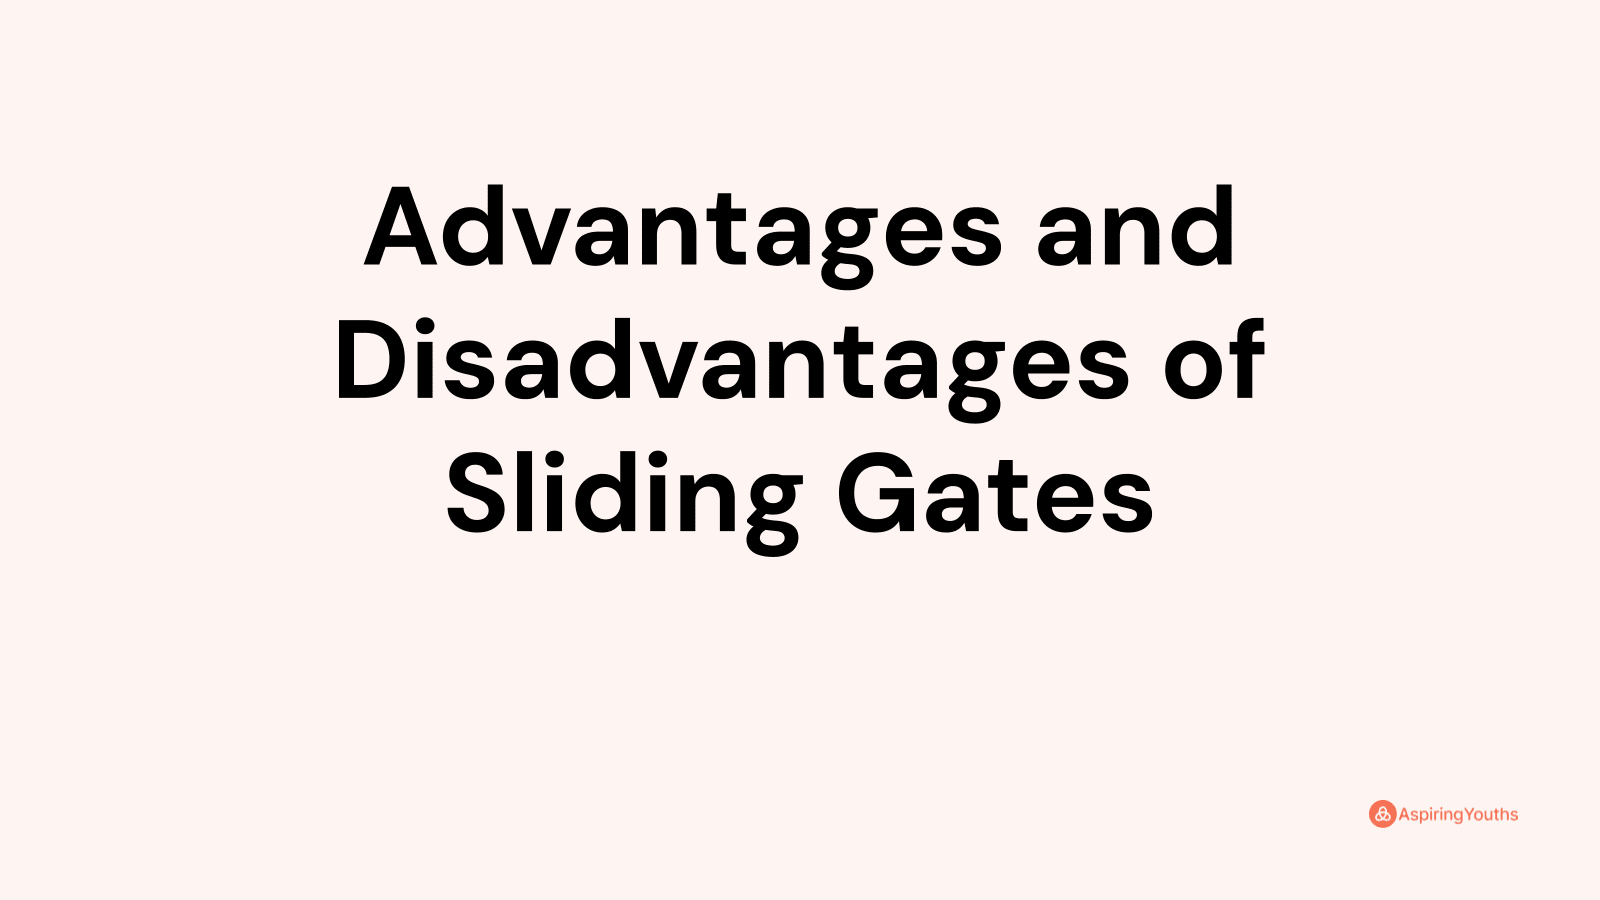 Advantages and disadvantages of Sliding Gates